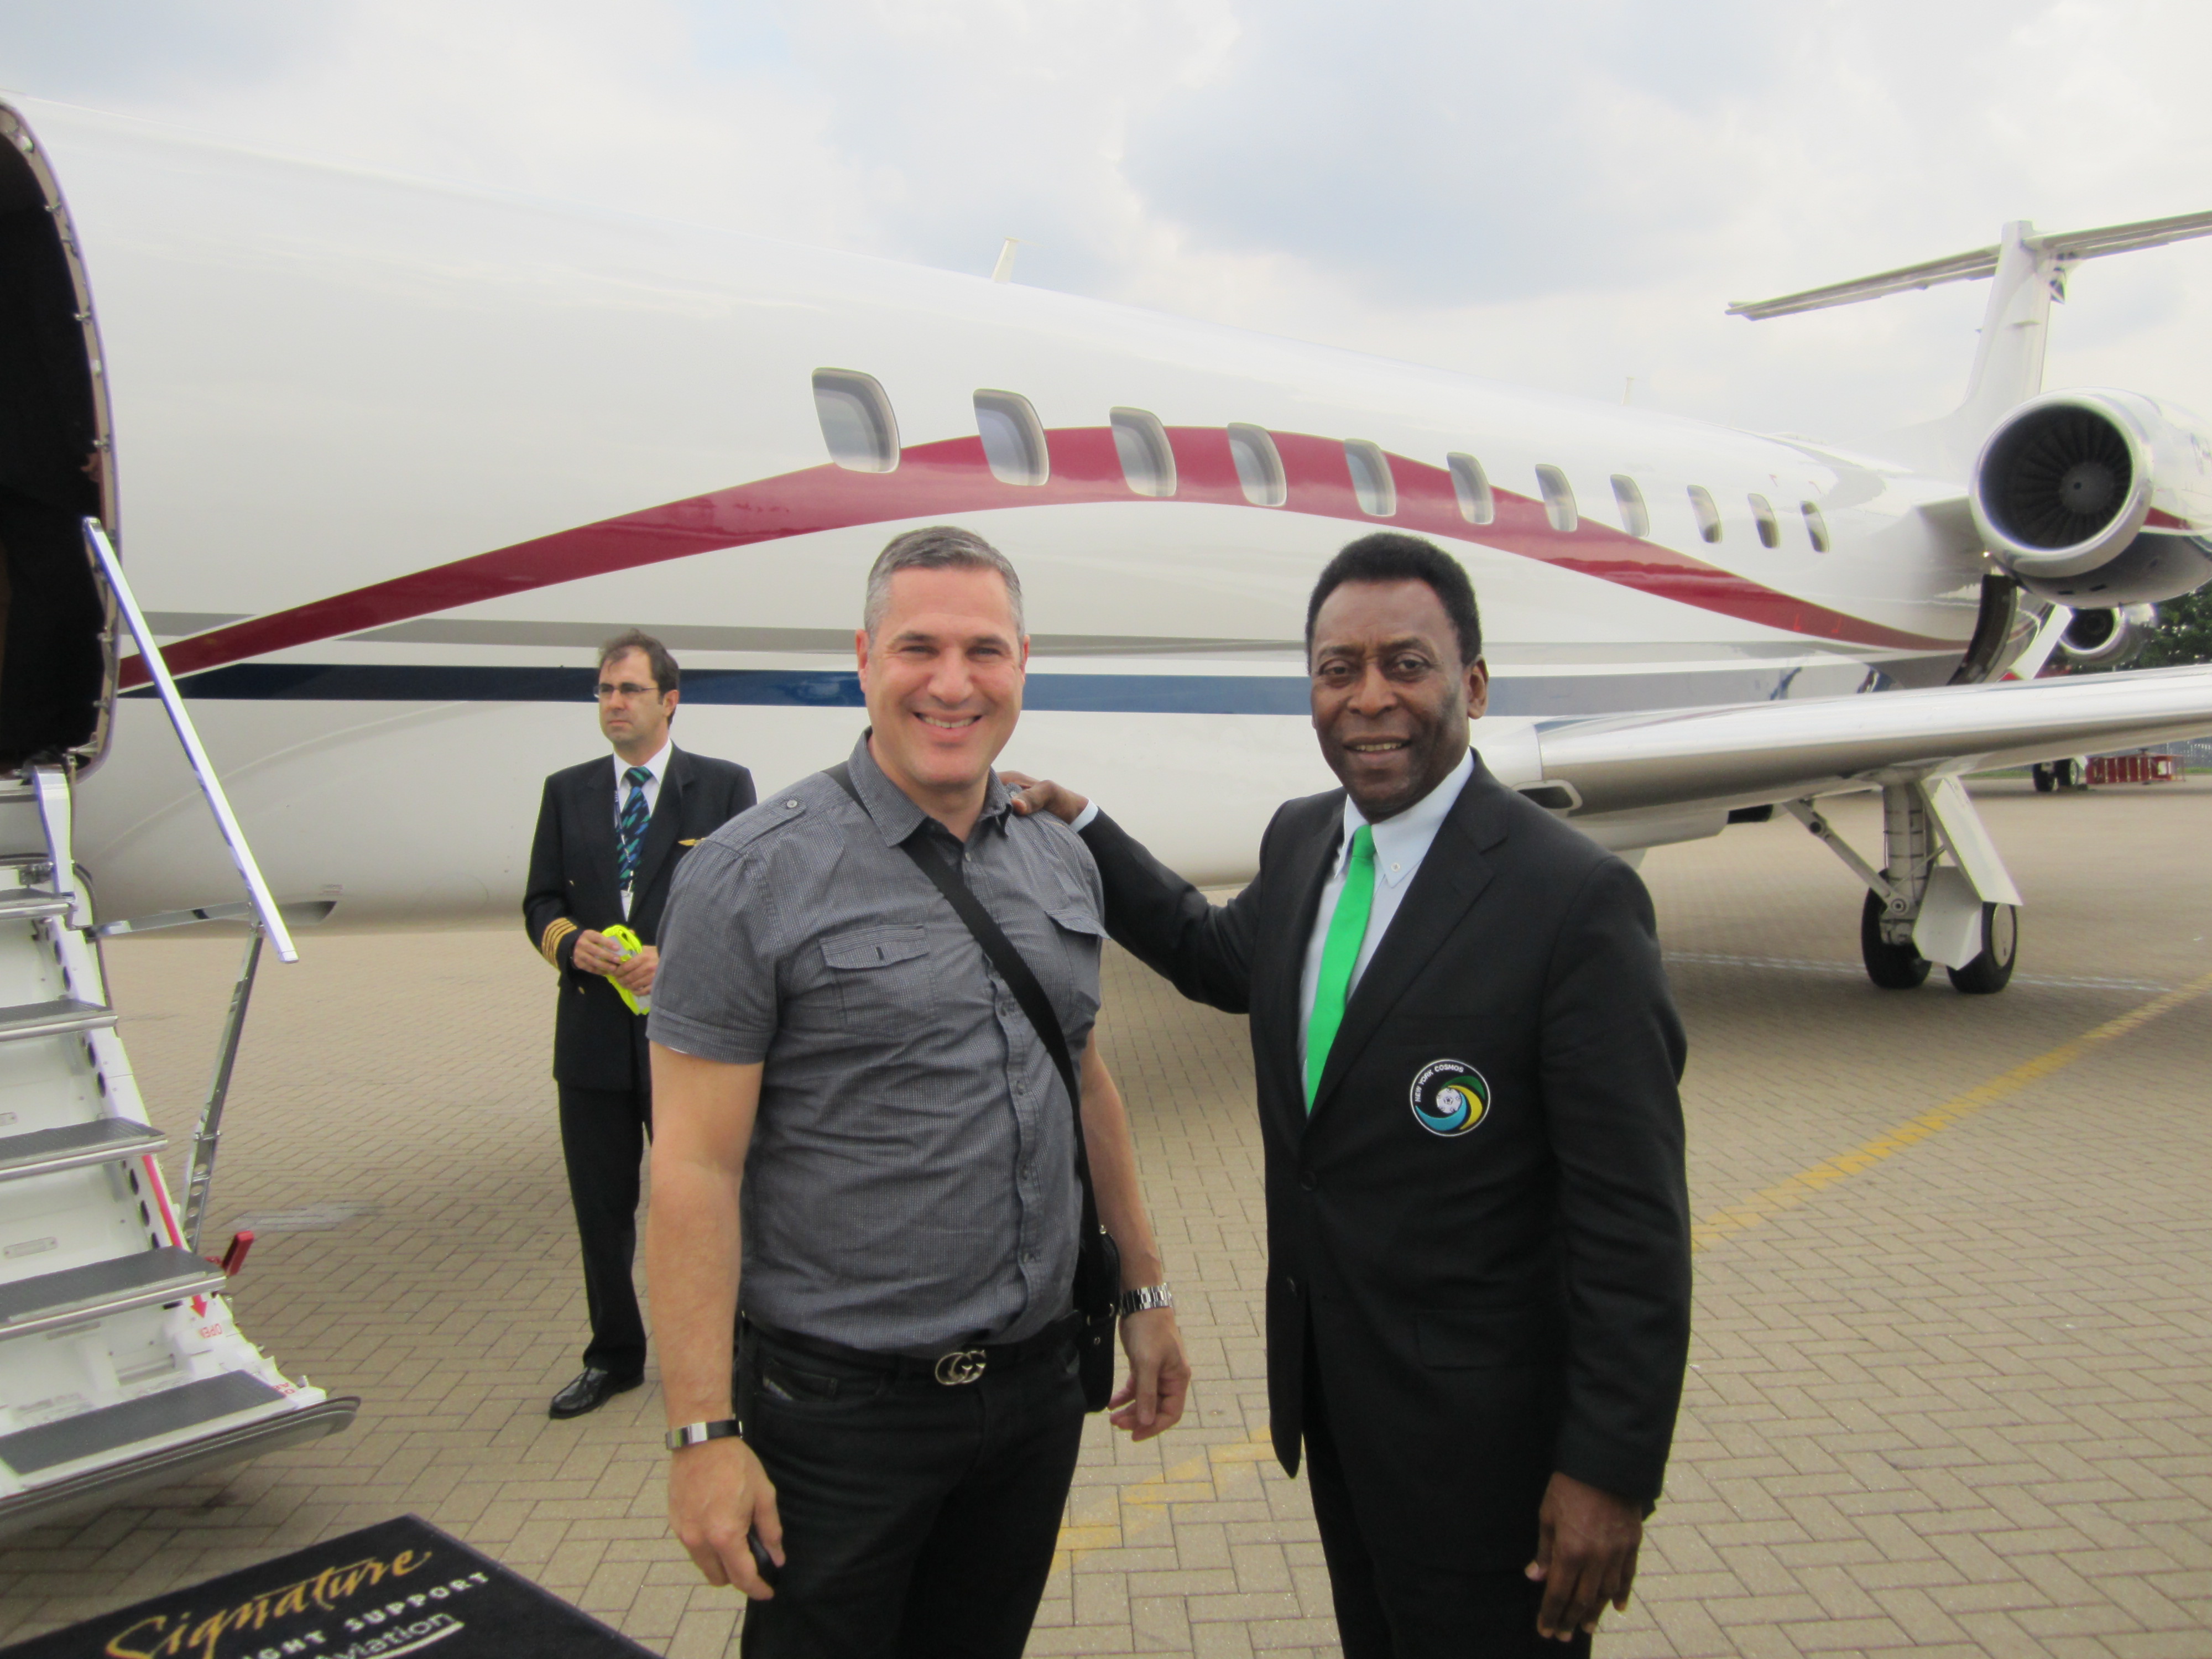 File:Michael Wildes, Pele, outside airplane, April 2014.jpg - Wikipedia